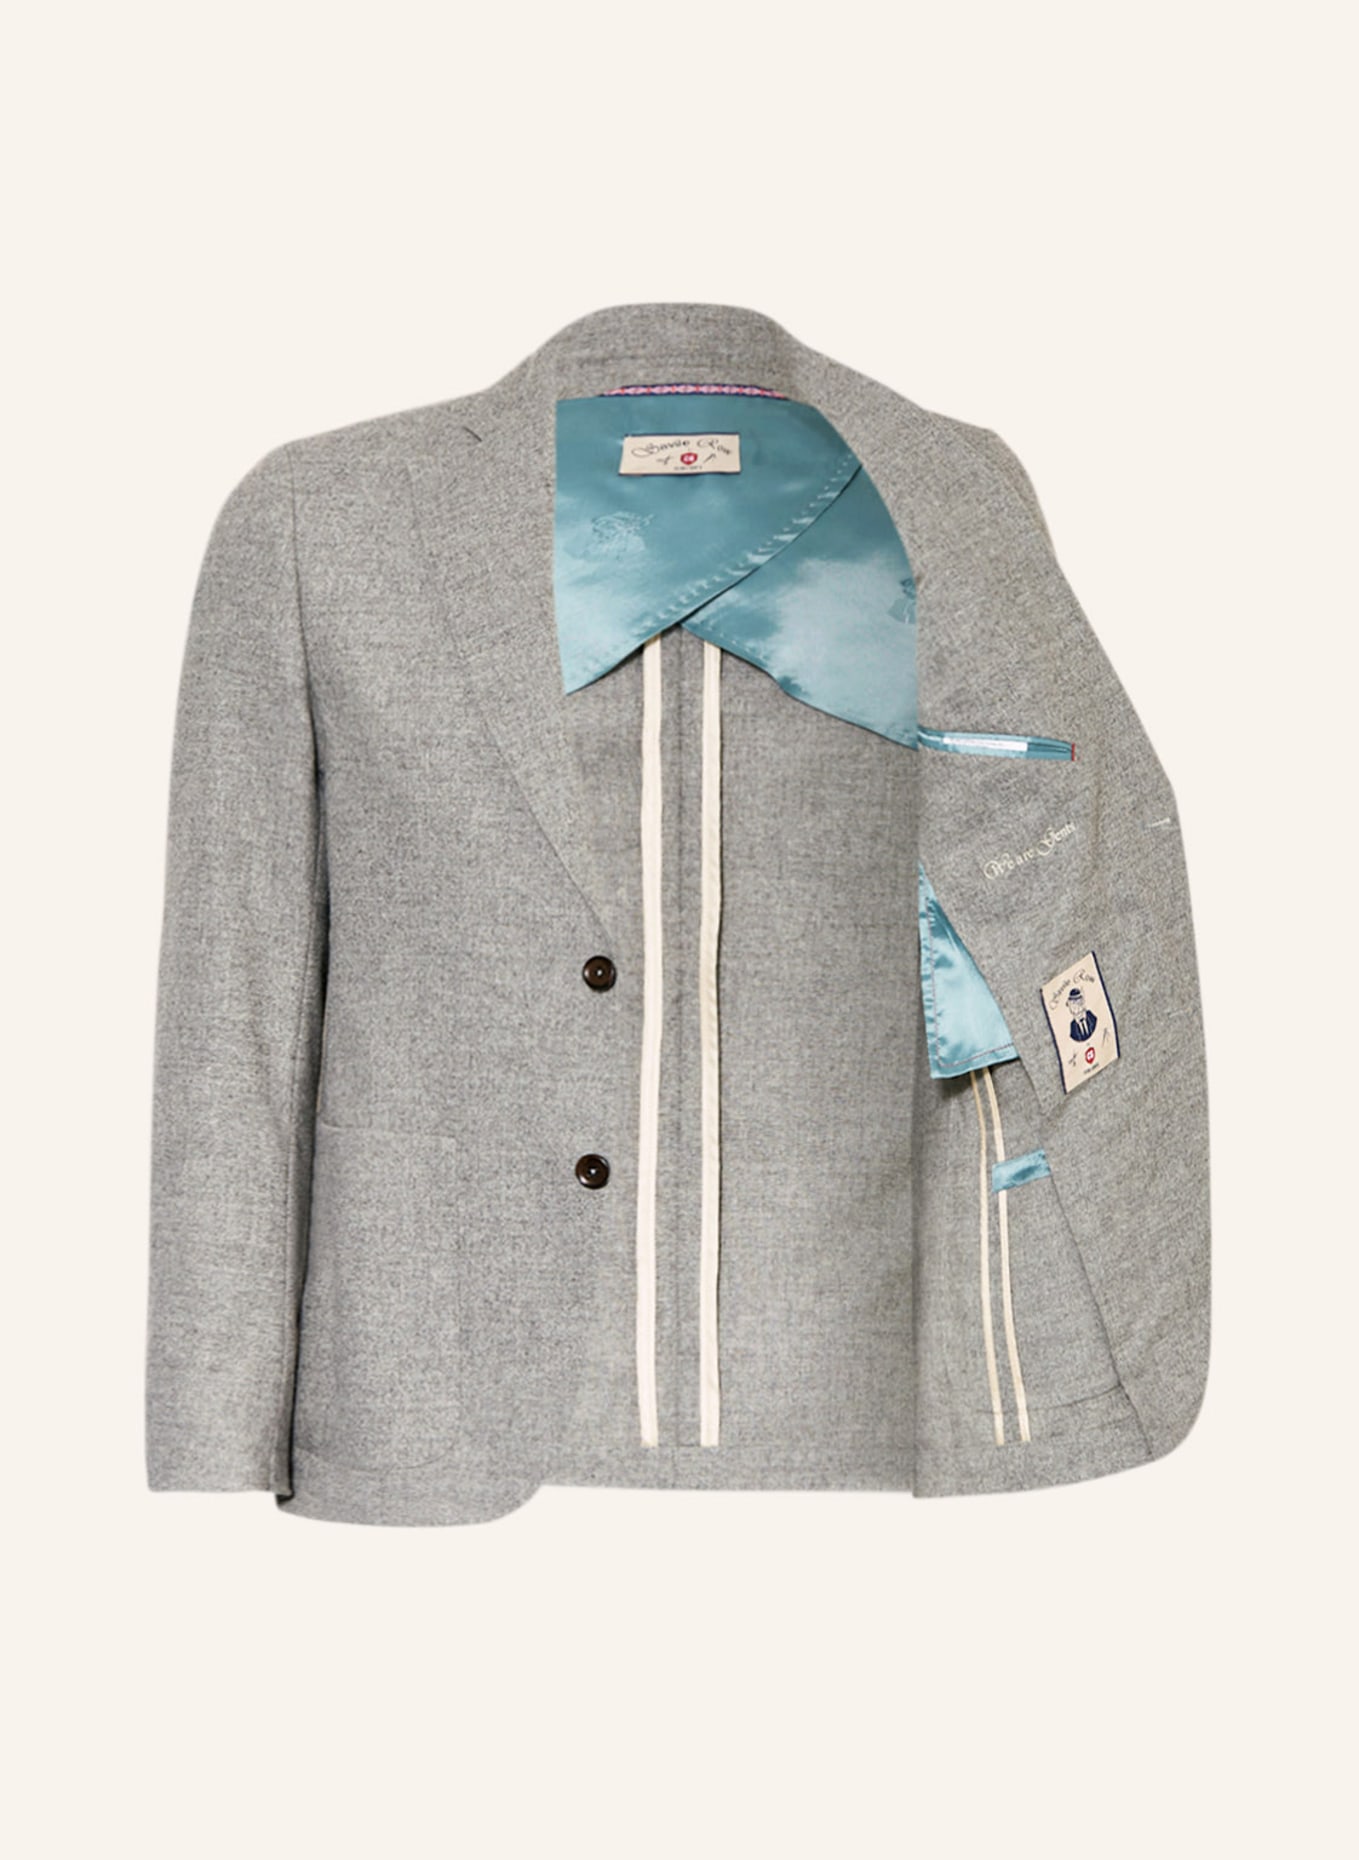 CG - CLUB of GENTS Suit jacket CG CONLEY slim fit, Color: 81 grau hell (Image 4)